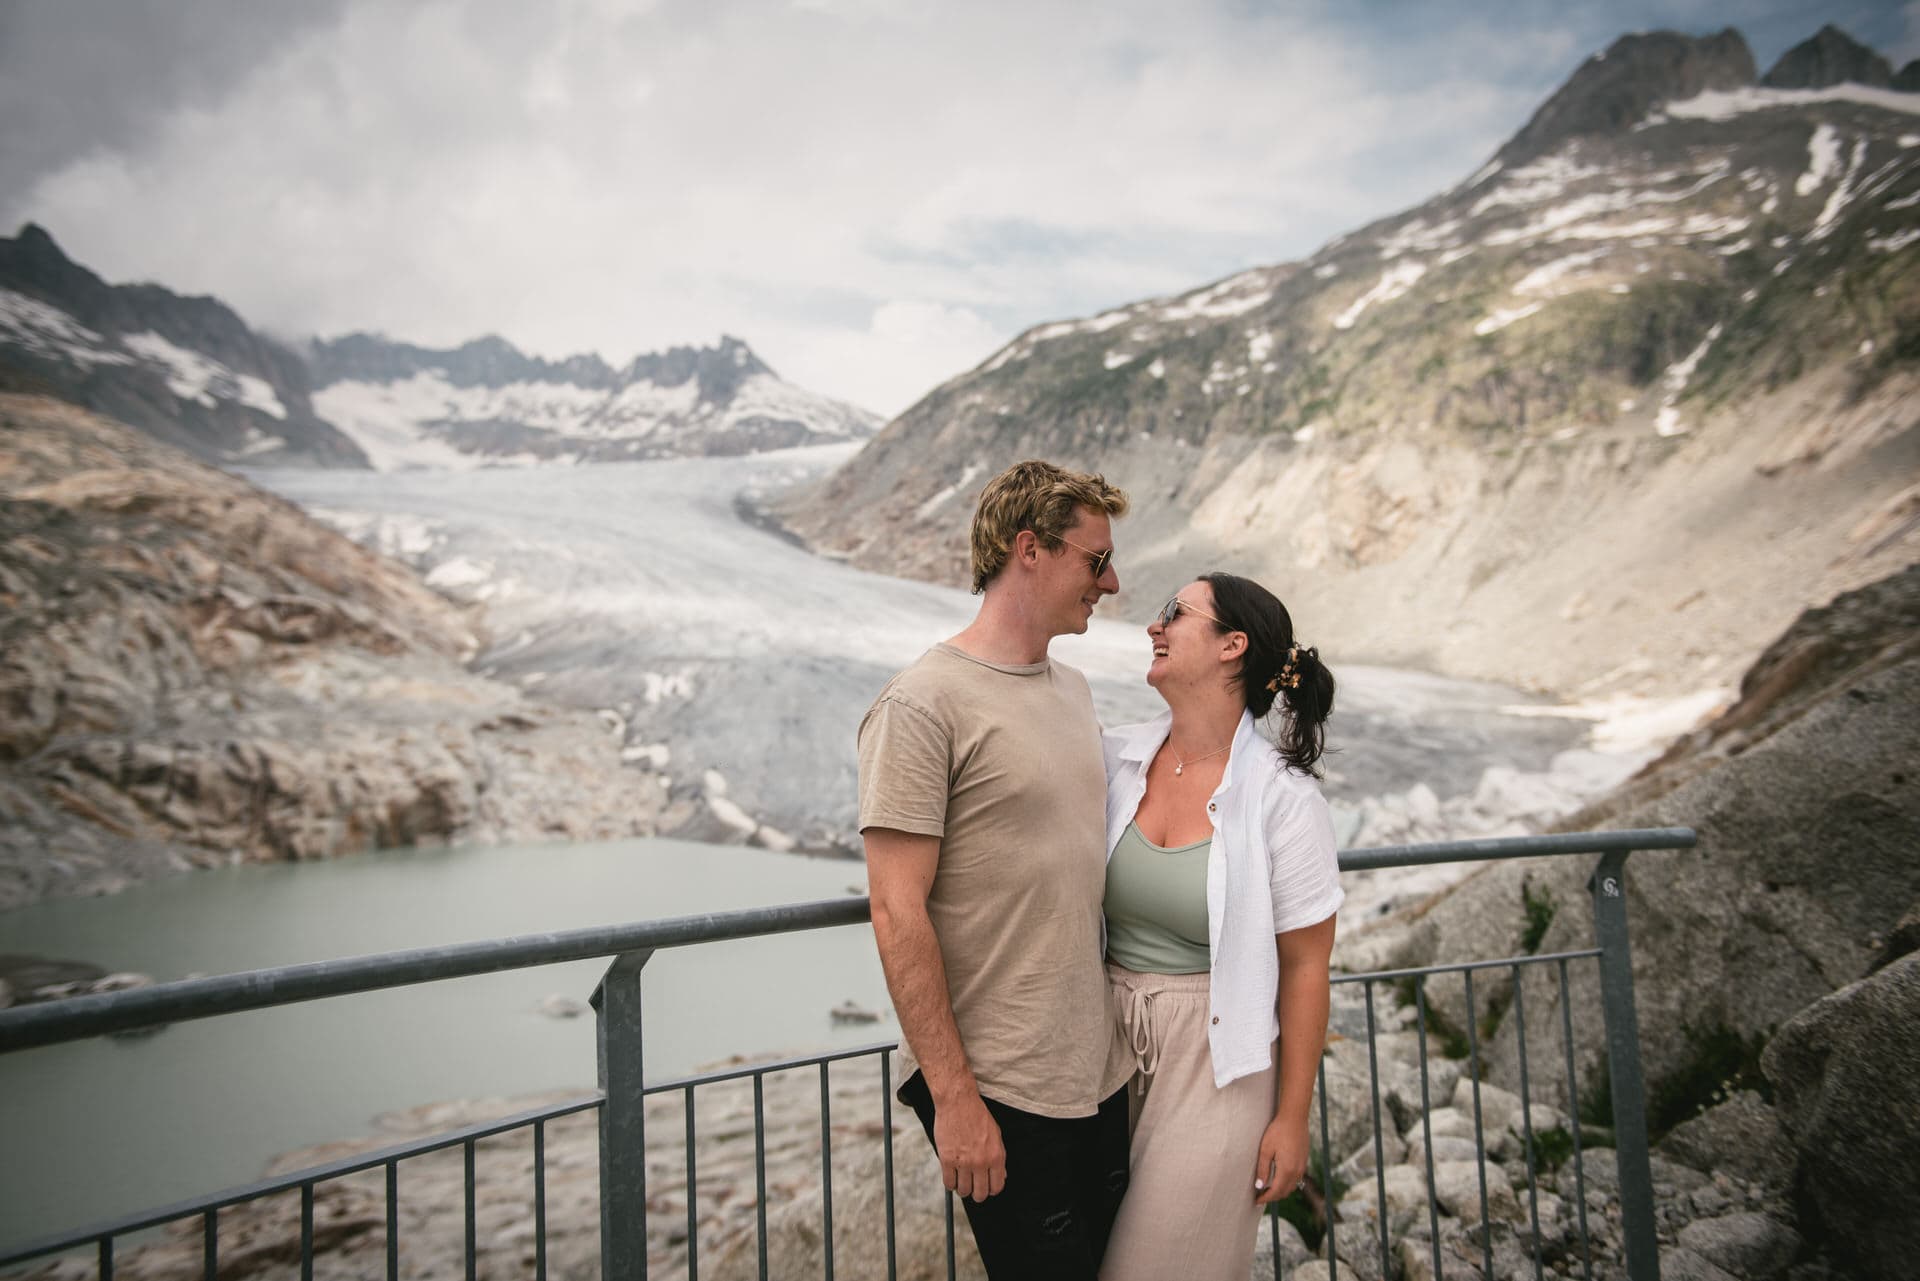 Alpine charm, love's sanctuary - hiking elopement in Switzerland.